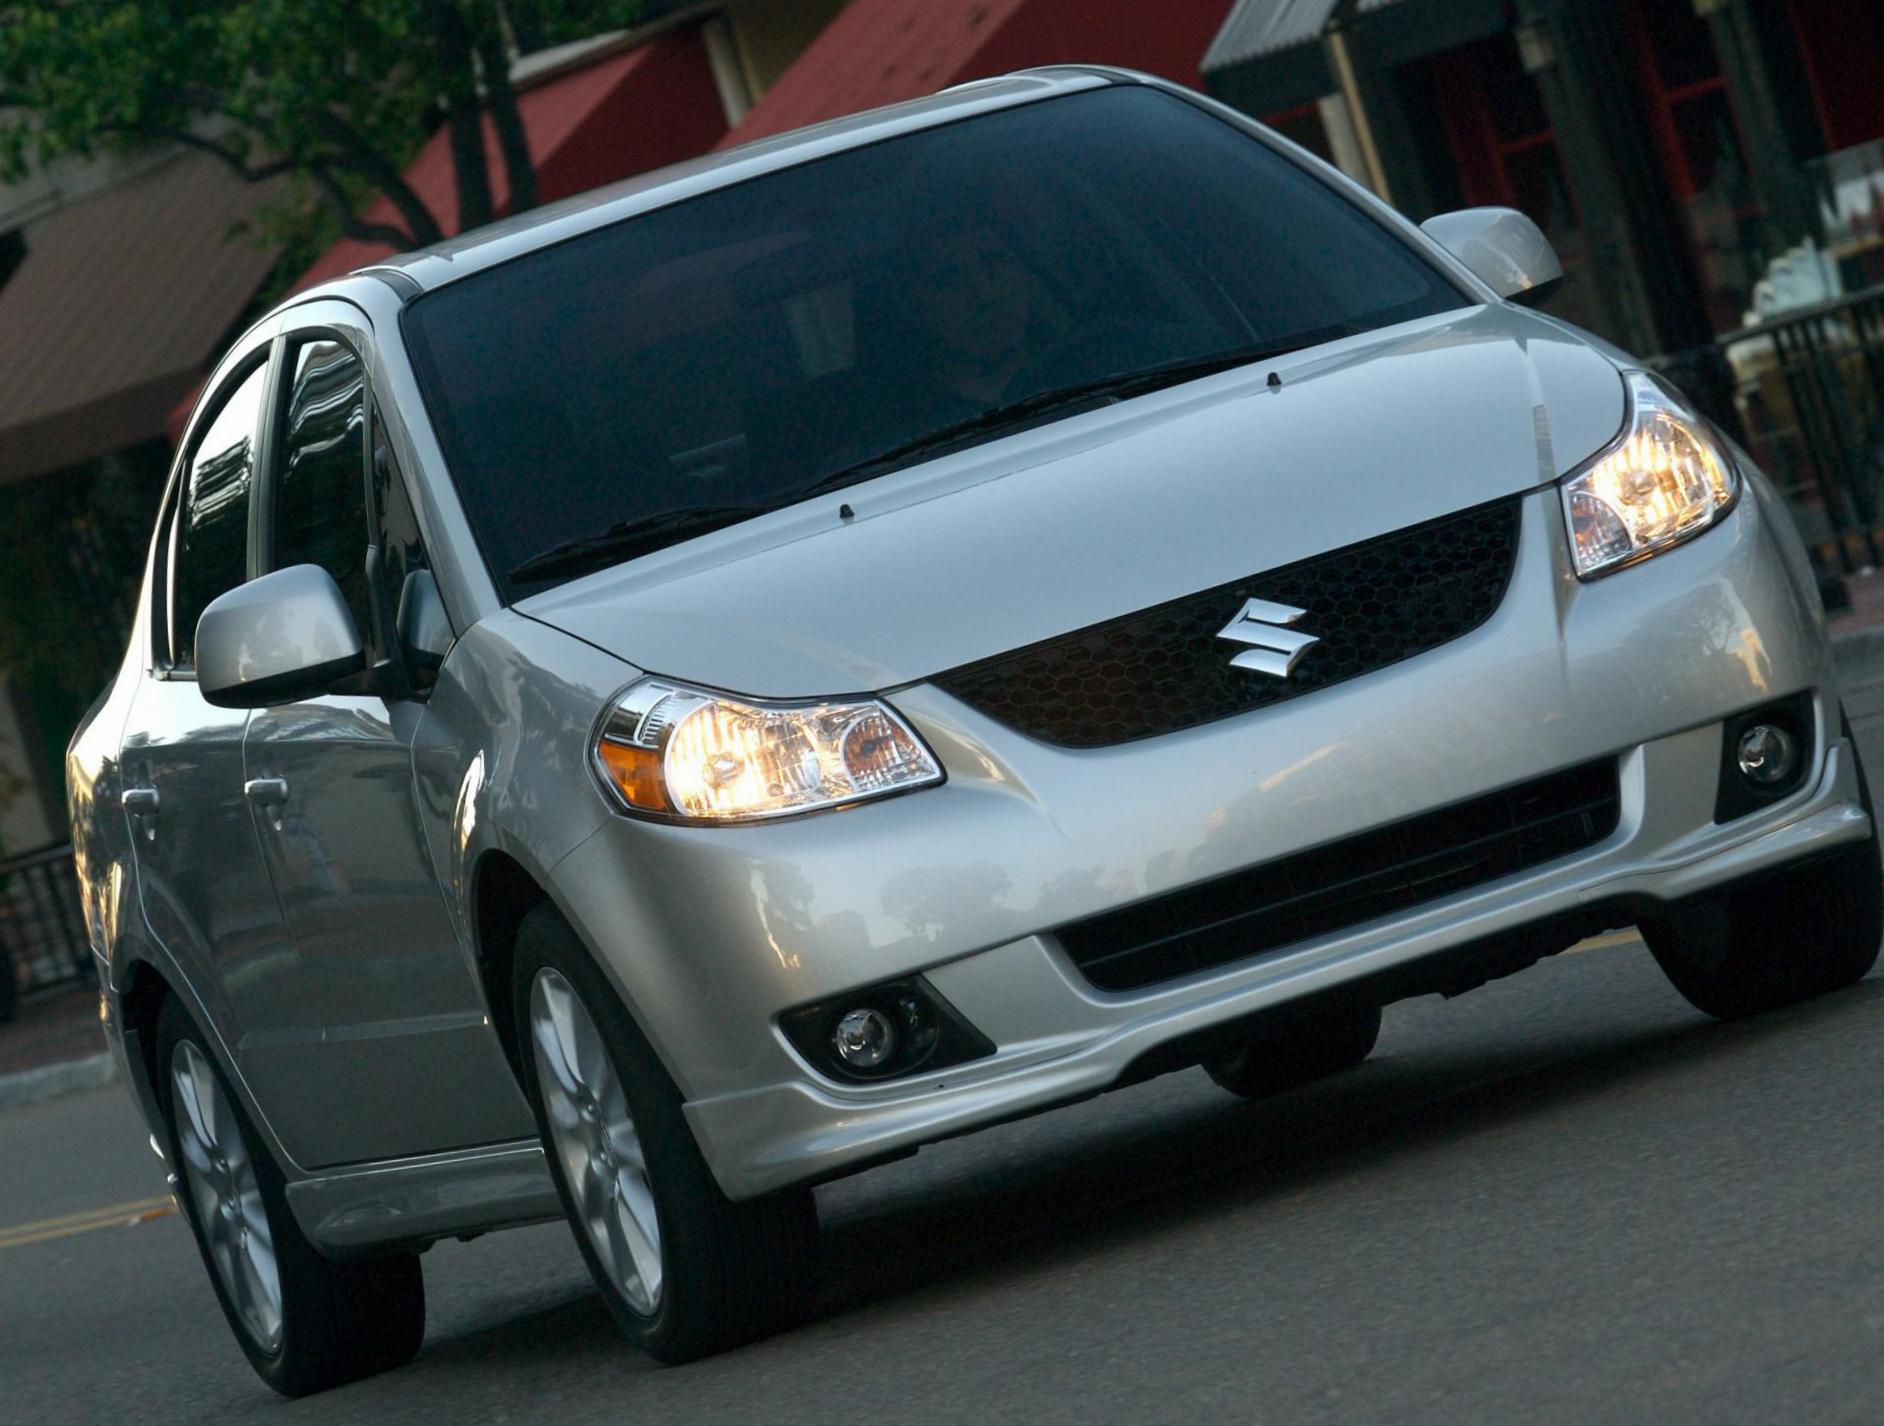 SX4 Sedan Suzuki review 2009